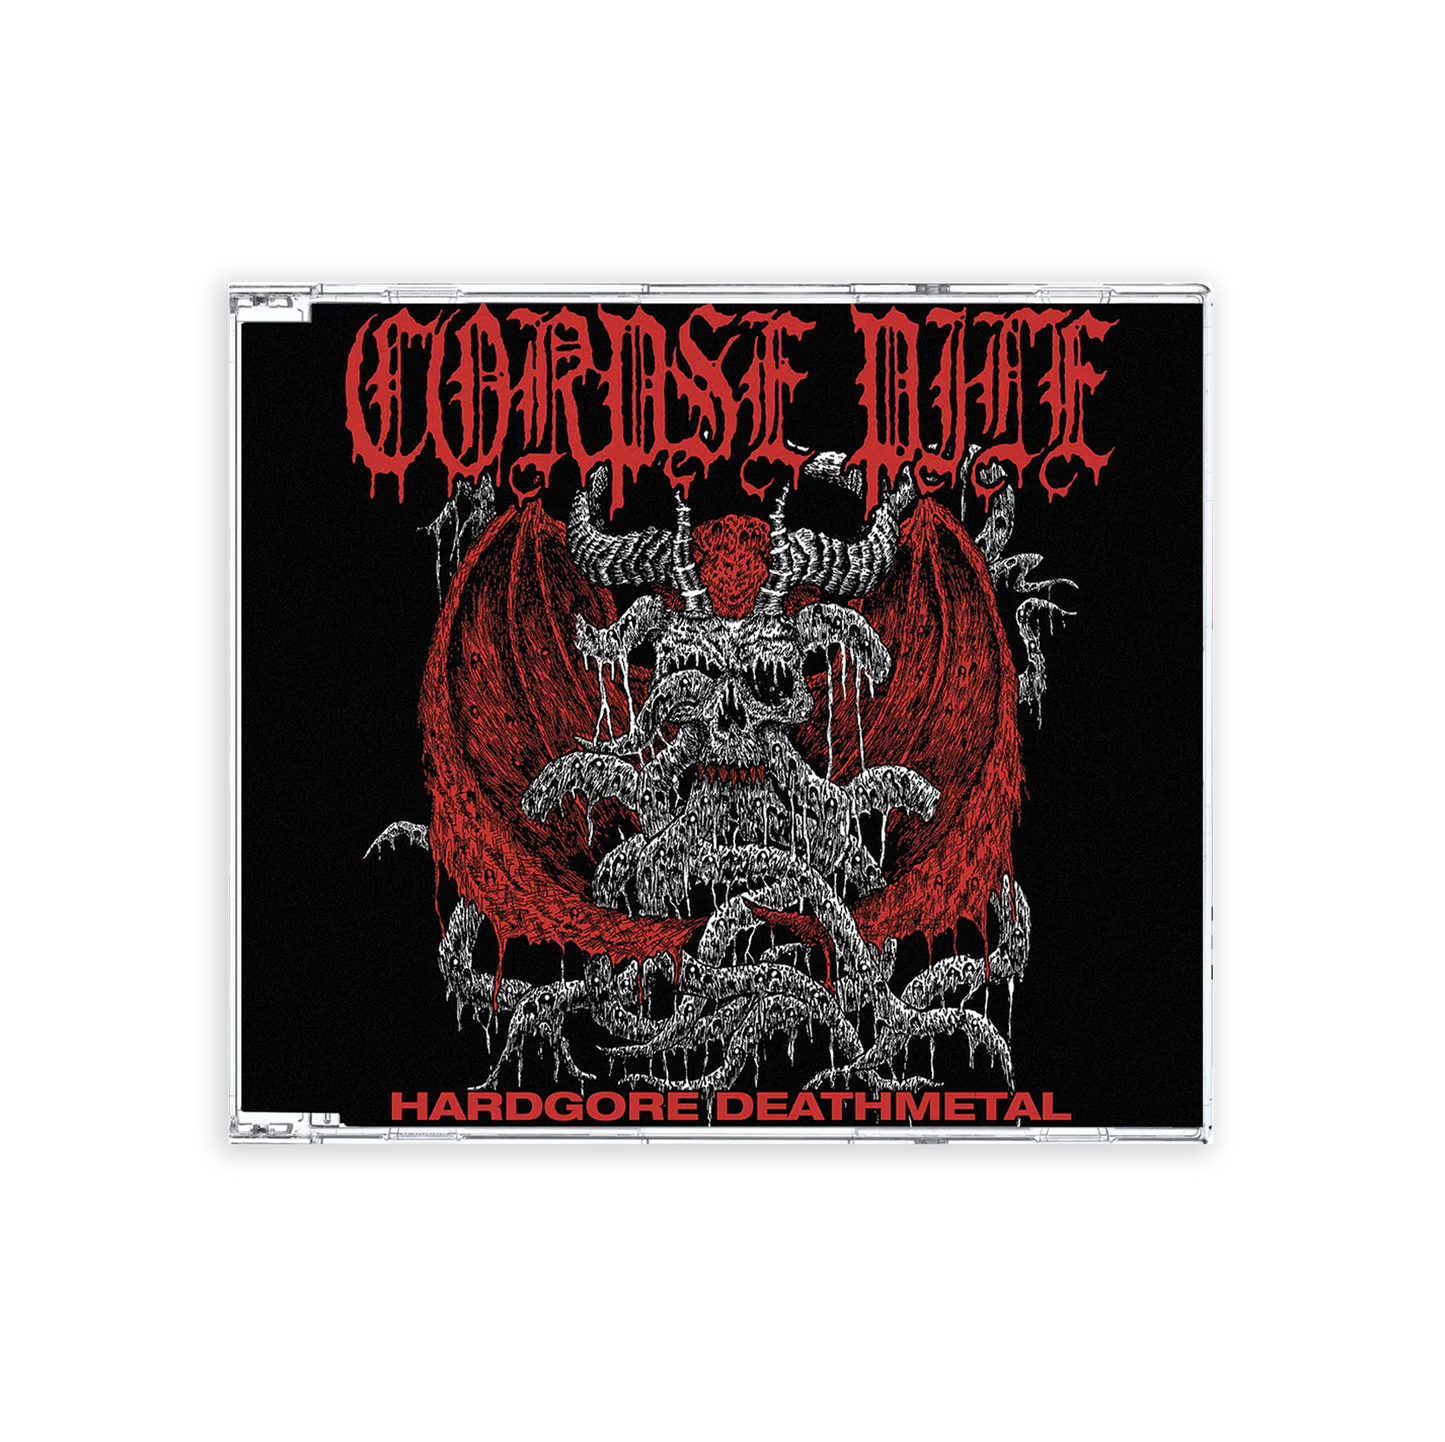 Corpse Pile "Hardgore Deathmetal" CD